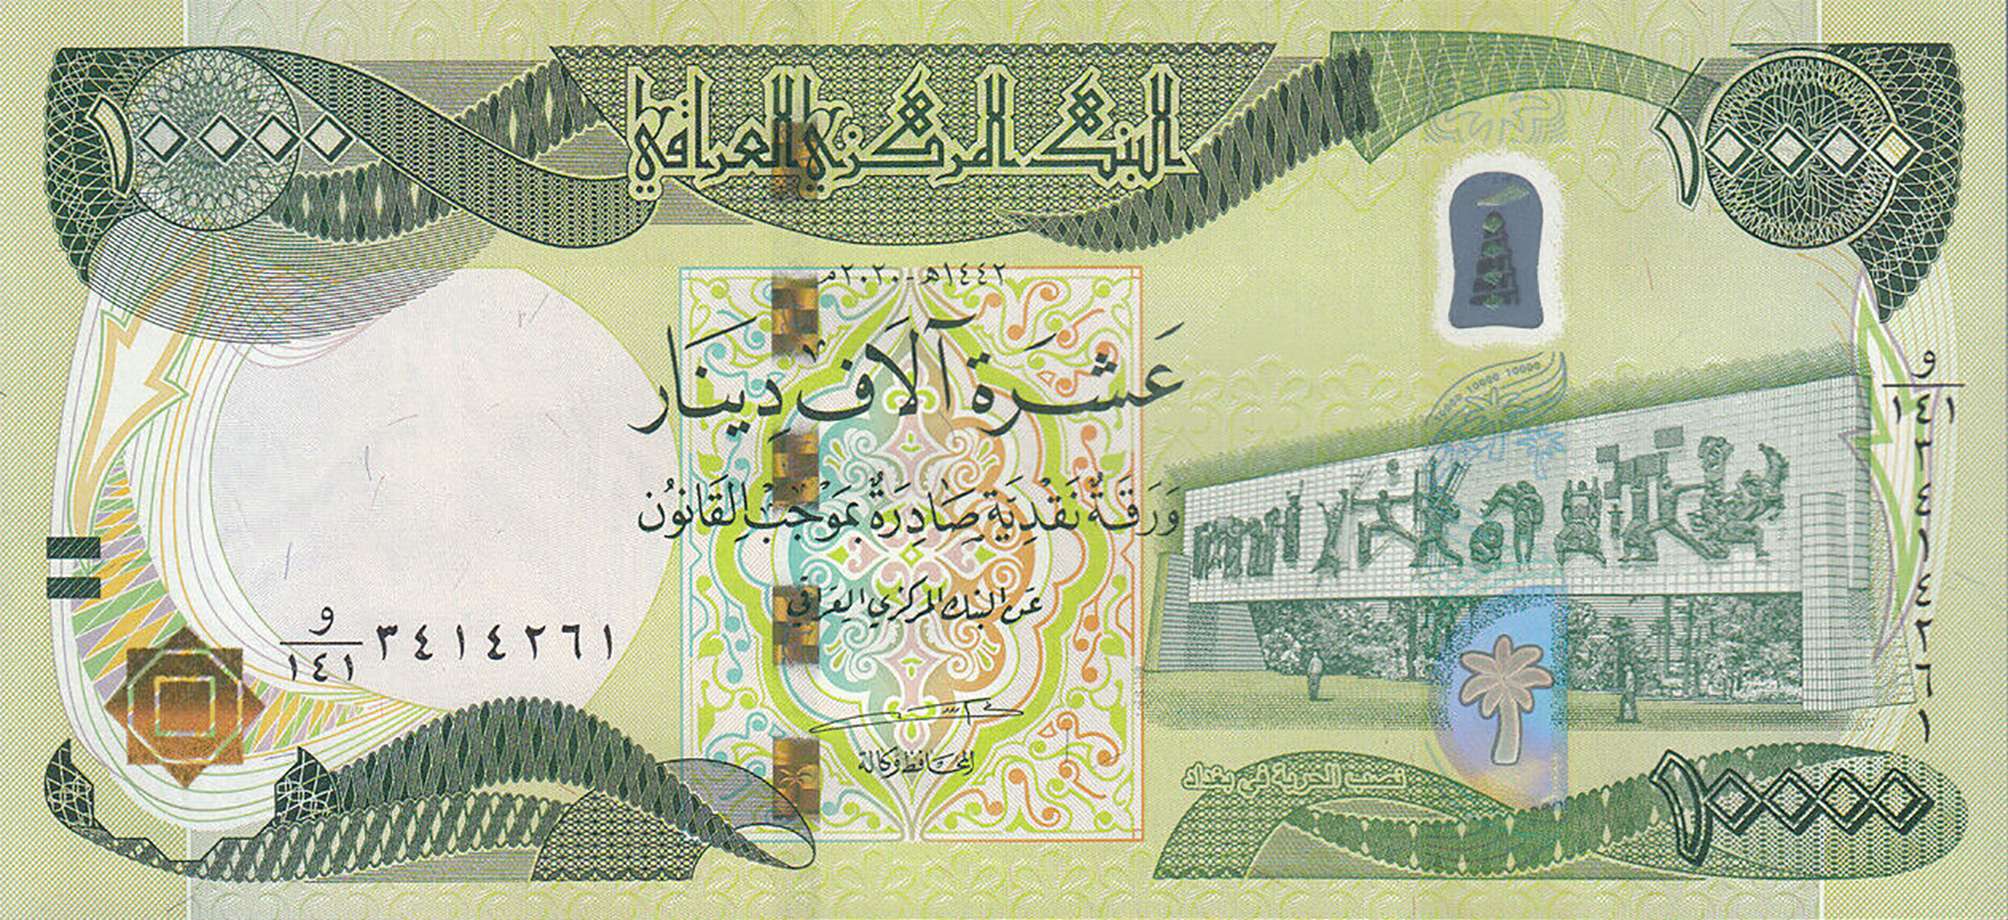 Iraq_CBI_10000_dinars_2020.00.00_B355d_P